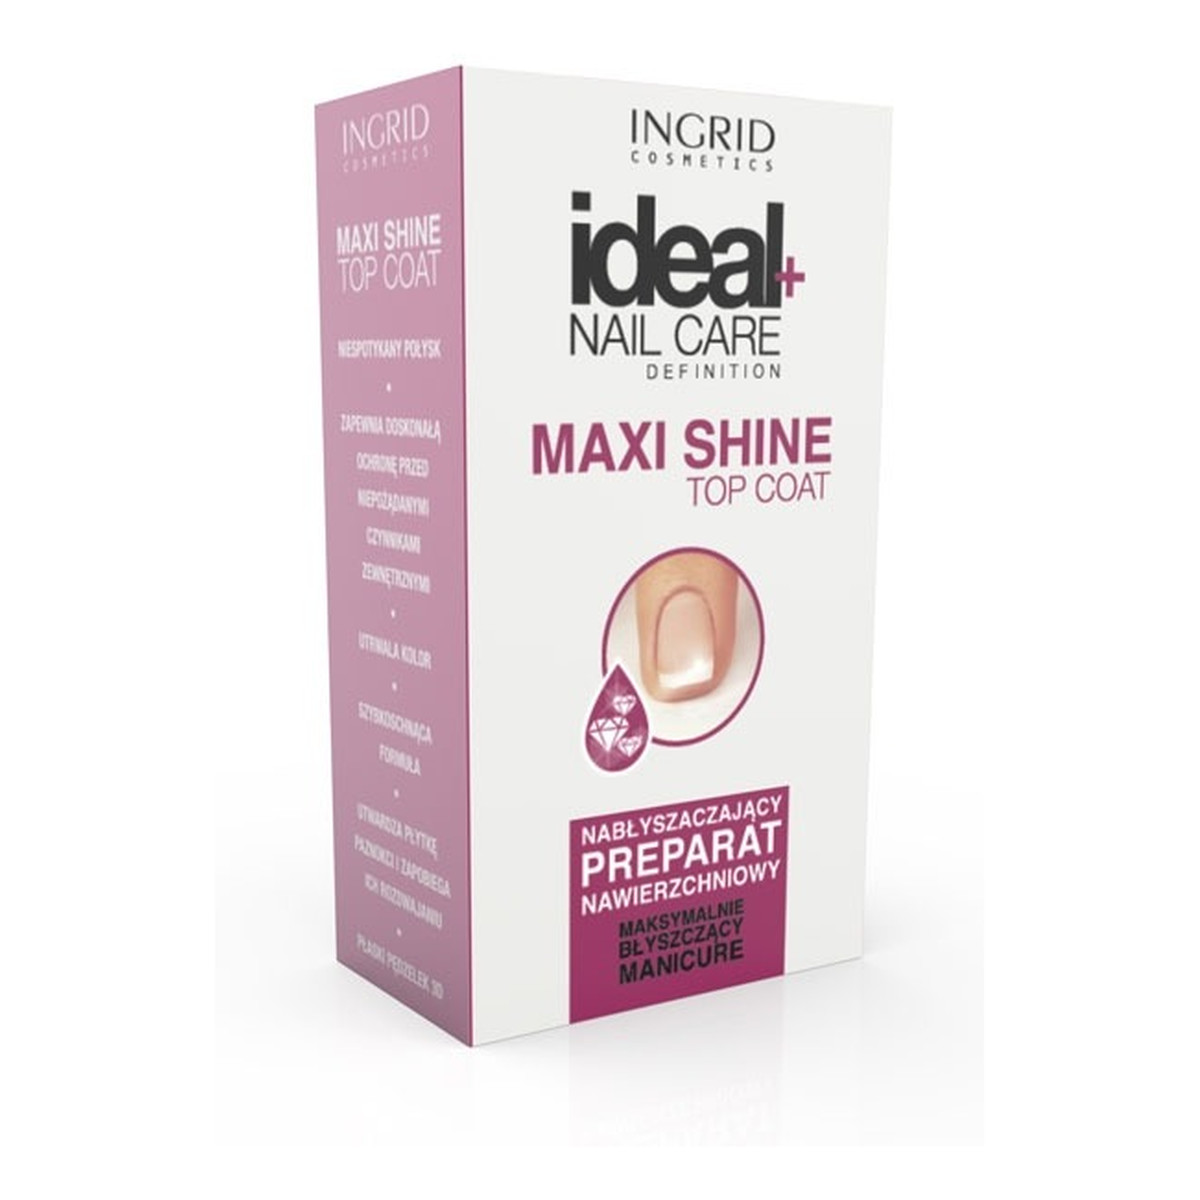 Ingrid Ideal Nail Care Definition Maxi Shine Preparat Nawierzchniowy Do Paznokci 7ml